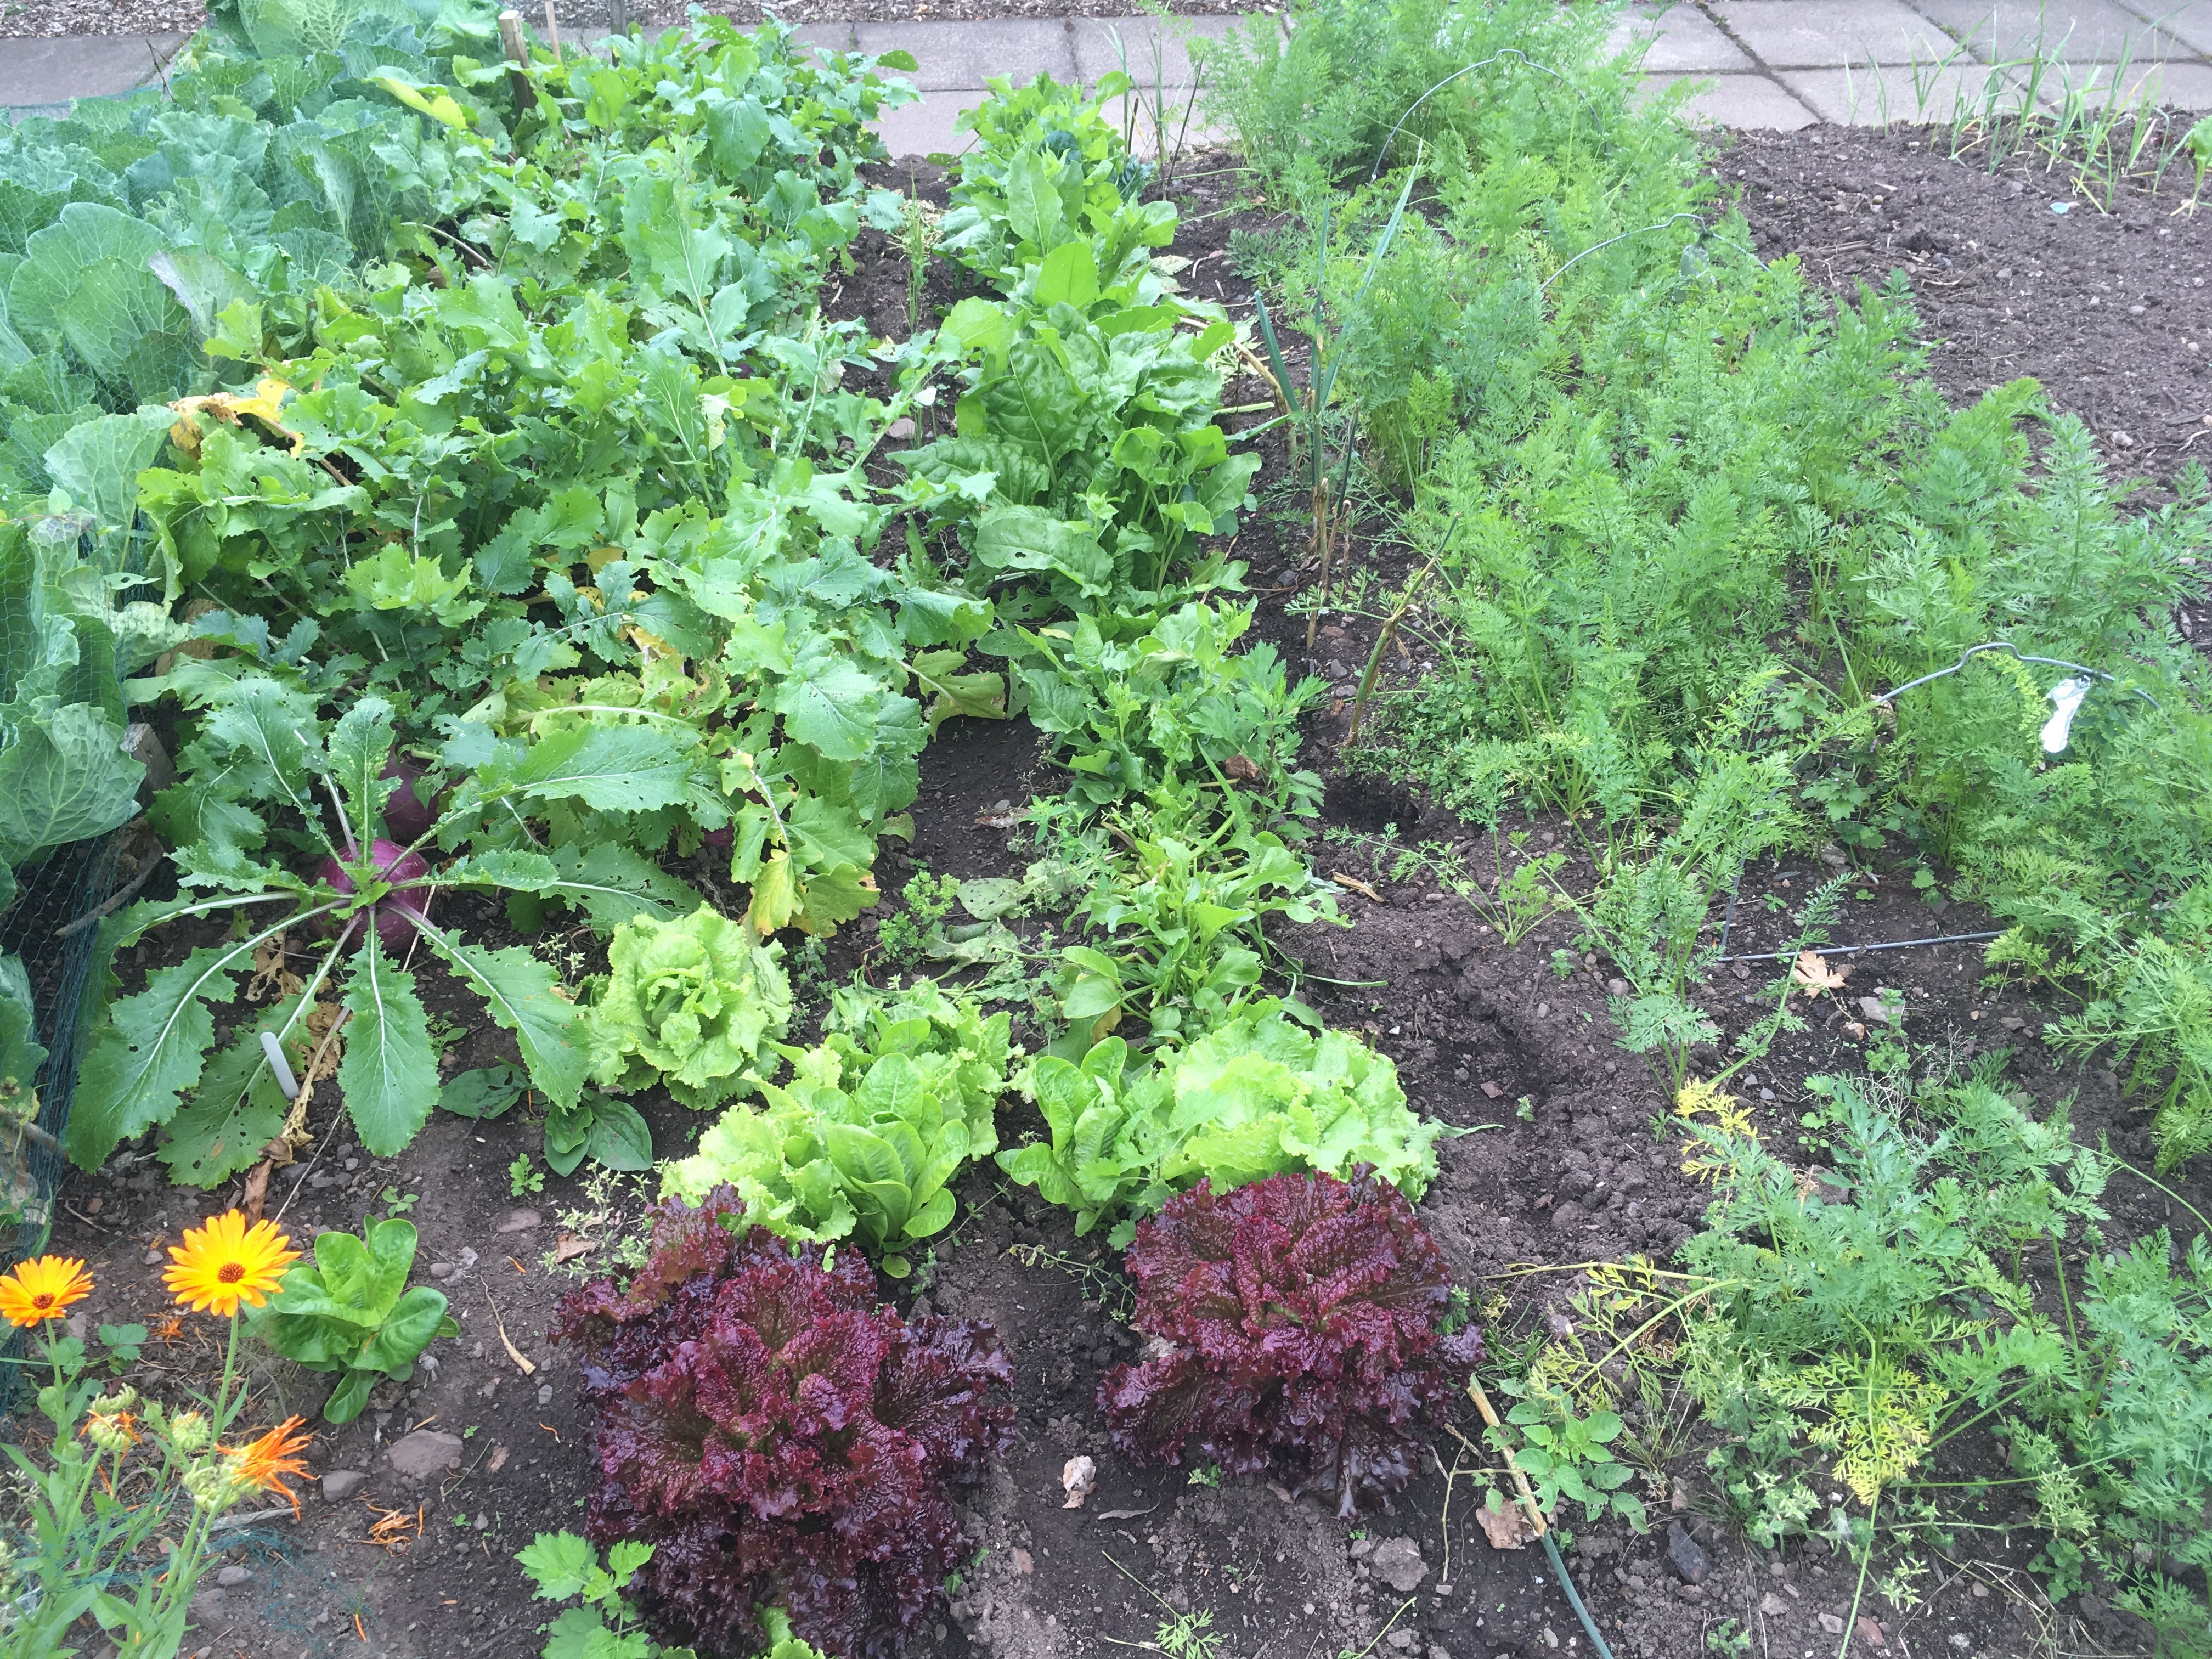 Mixed crops in a diverse vegetable garden